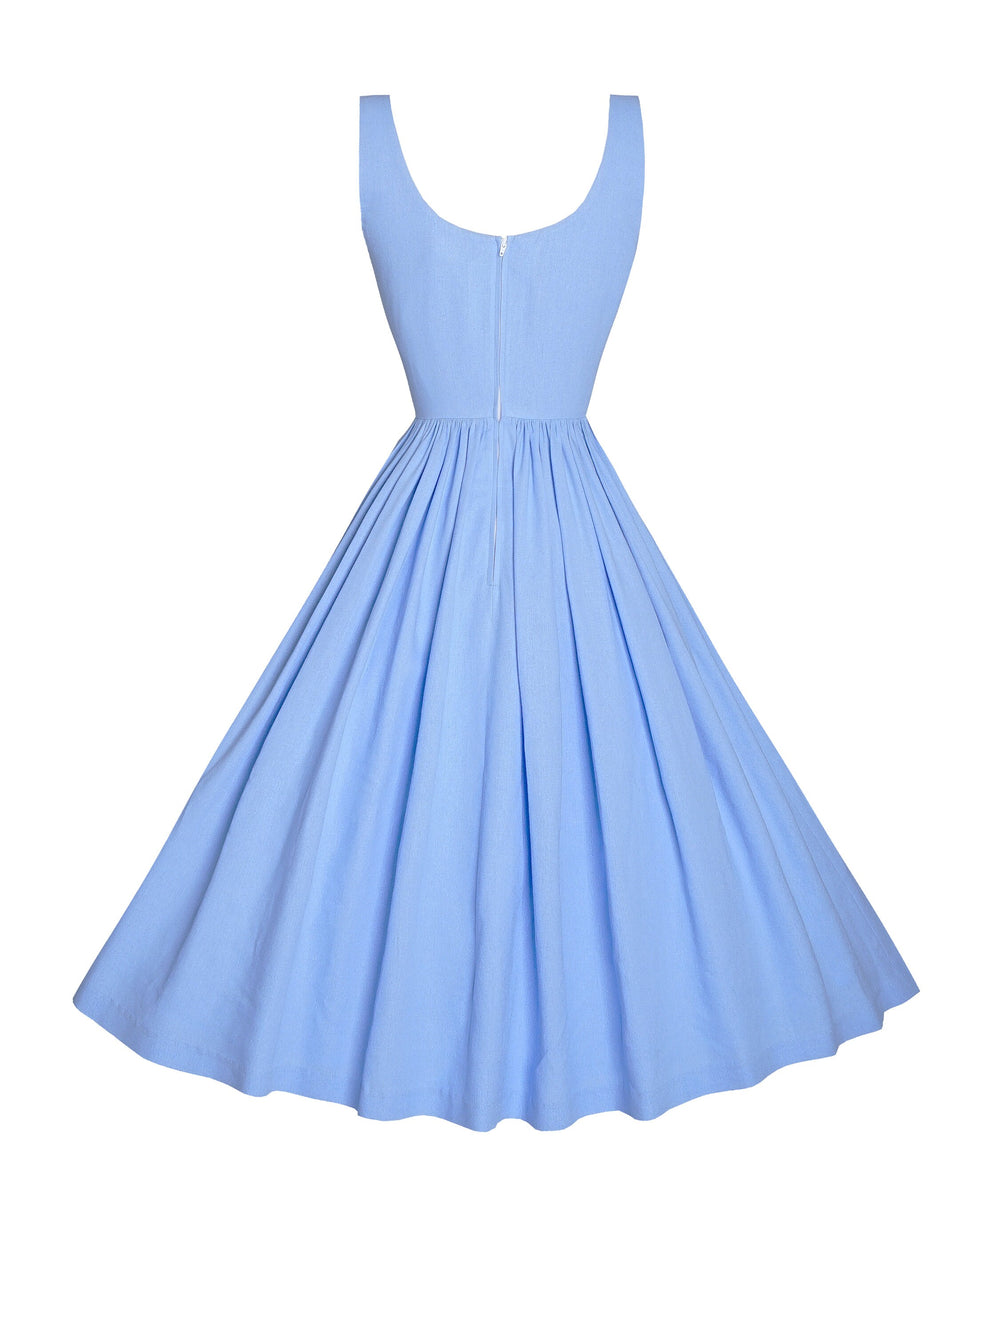 MTO - Emily Dress in Powder Blue Linen